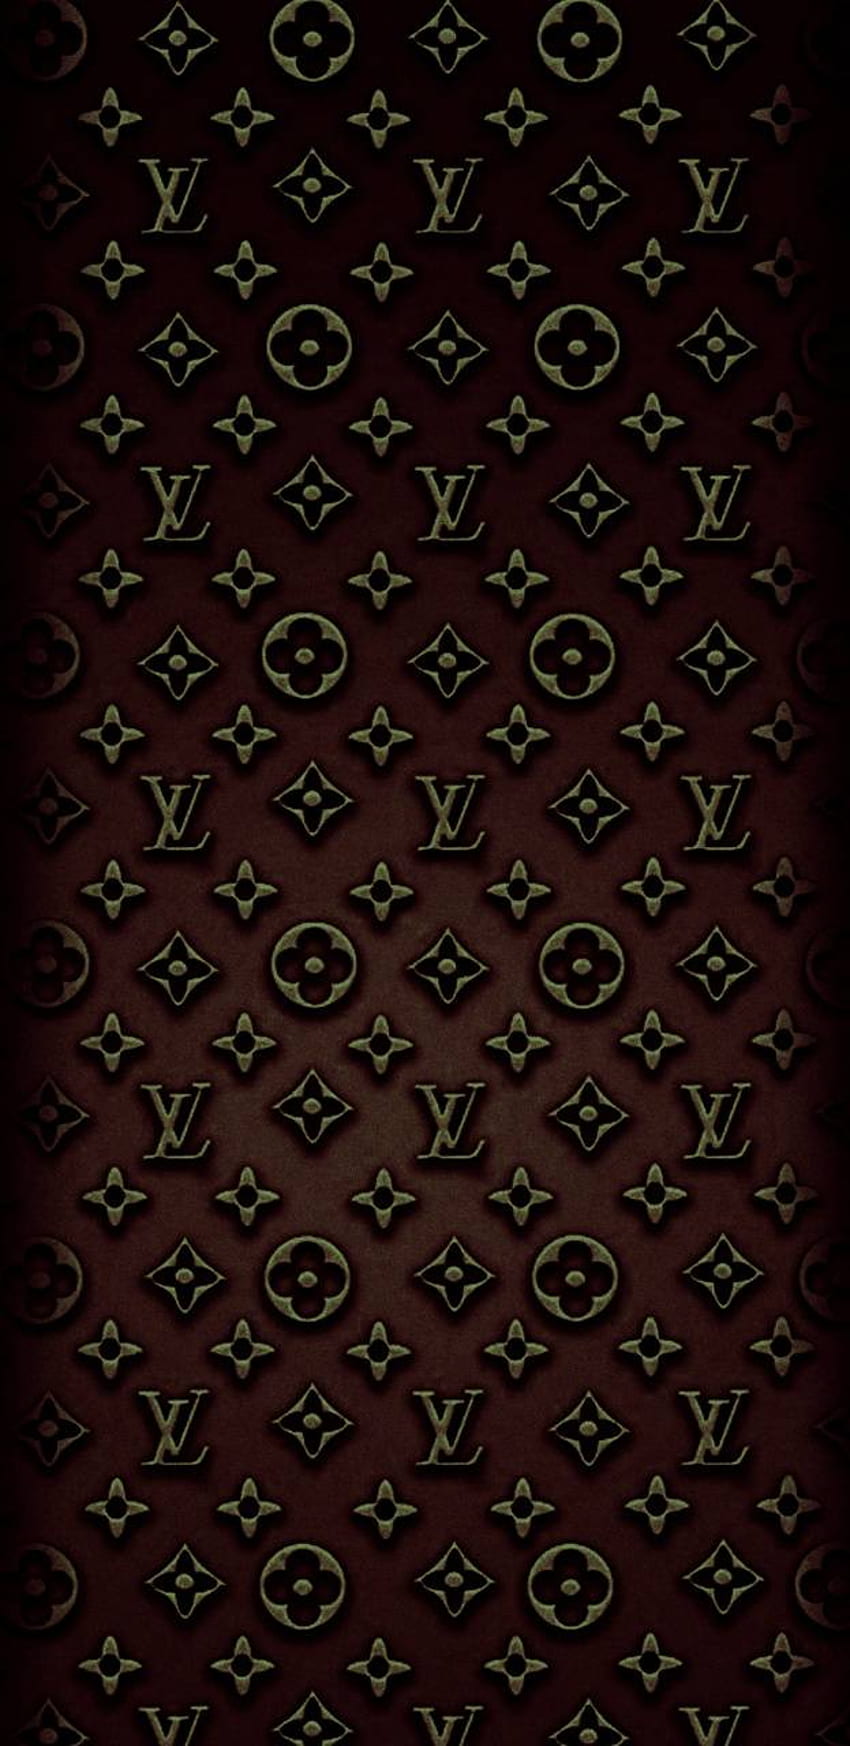 Ky⁷ 黄色  on Twitter BTS x Louis Vuitton Wallpaper  A reimagining of  the LV heritage print with some subtle bangtan BTSxLouisVuitton 방탄소년단  BTStwt btslockscreen httpstcom9t4ZZS85A  Twitter